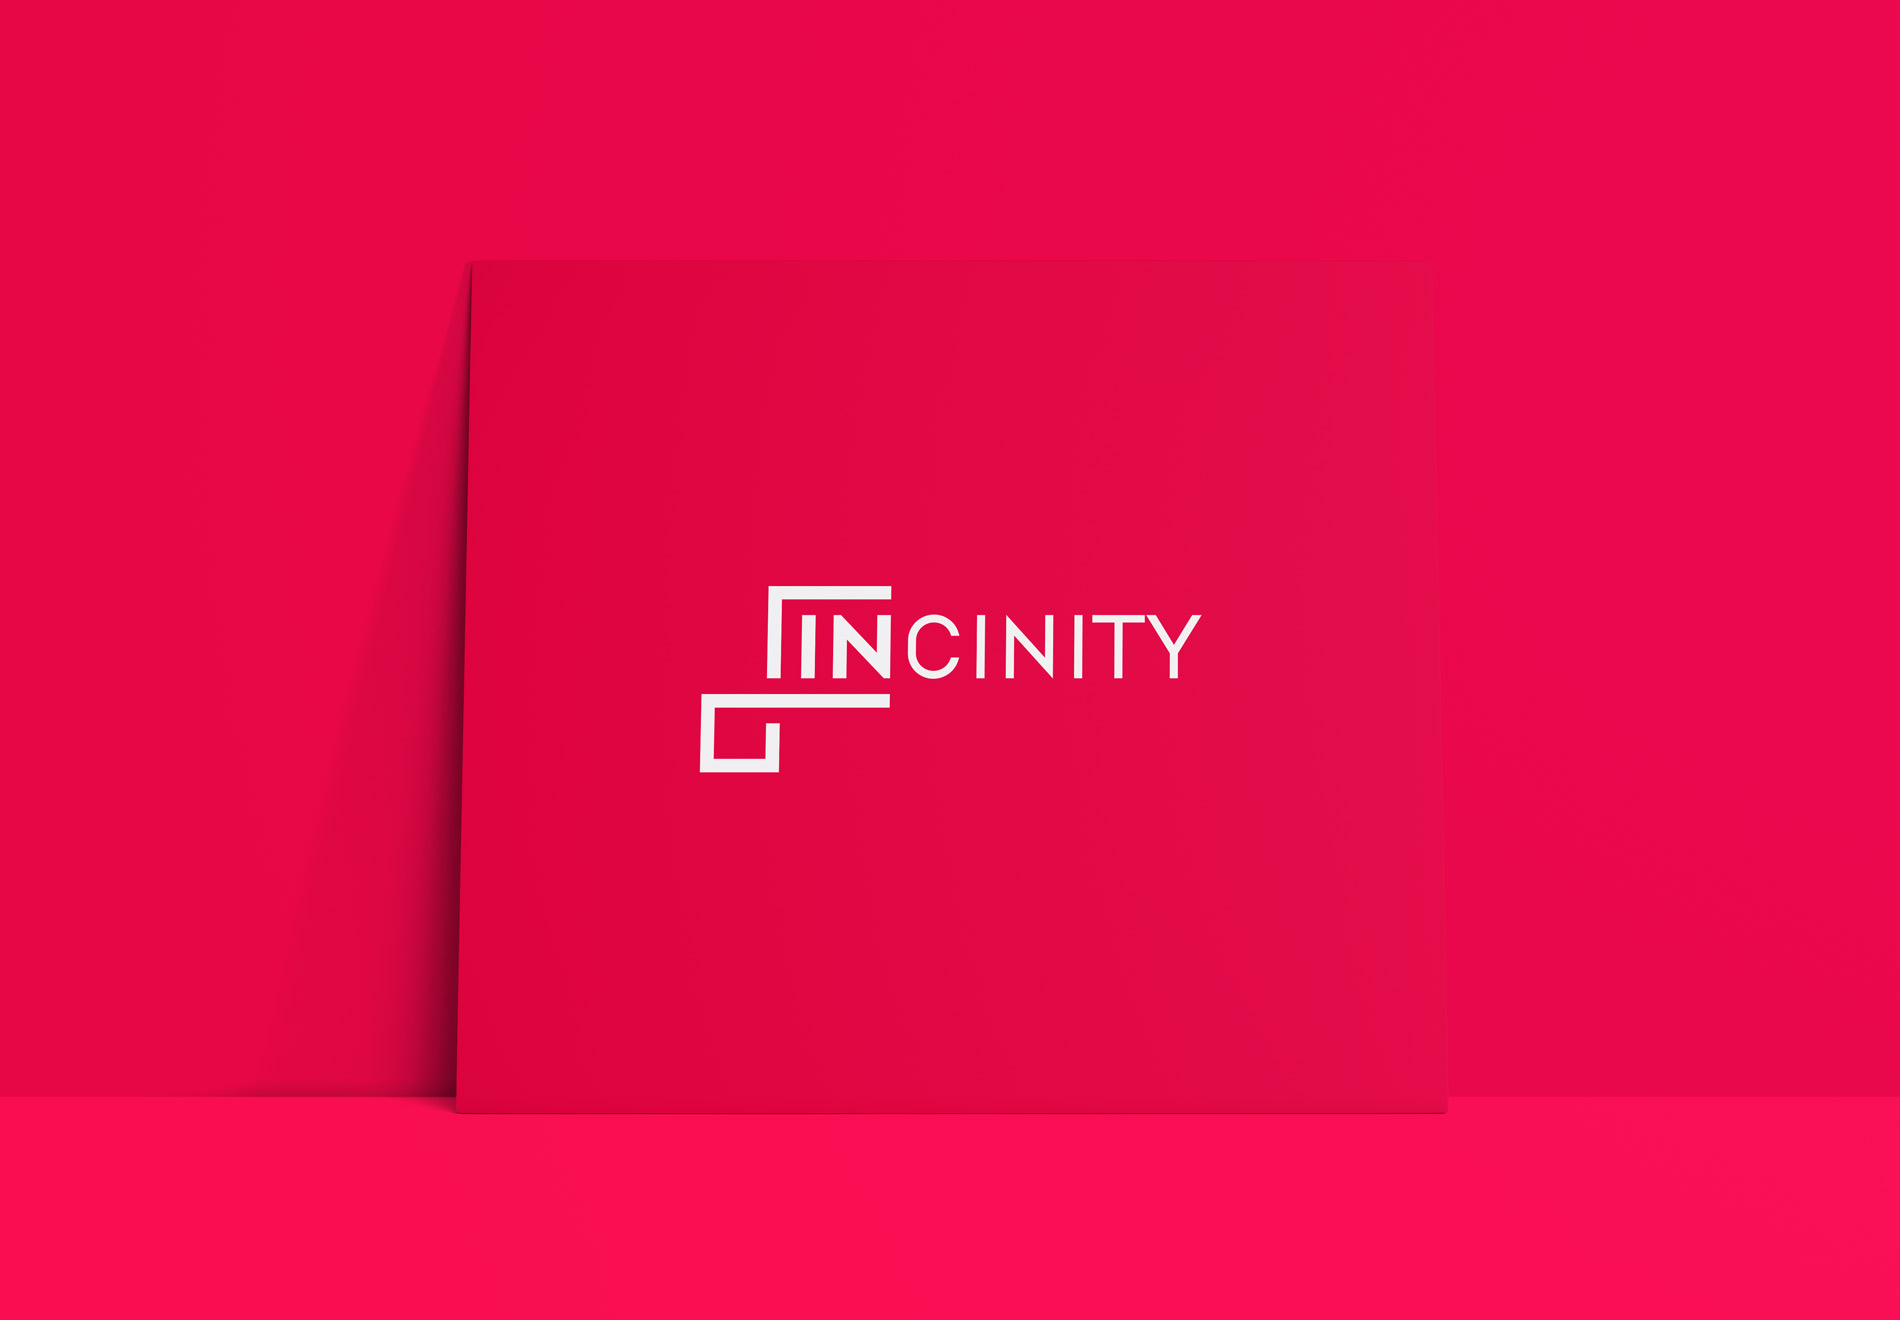 Incinity